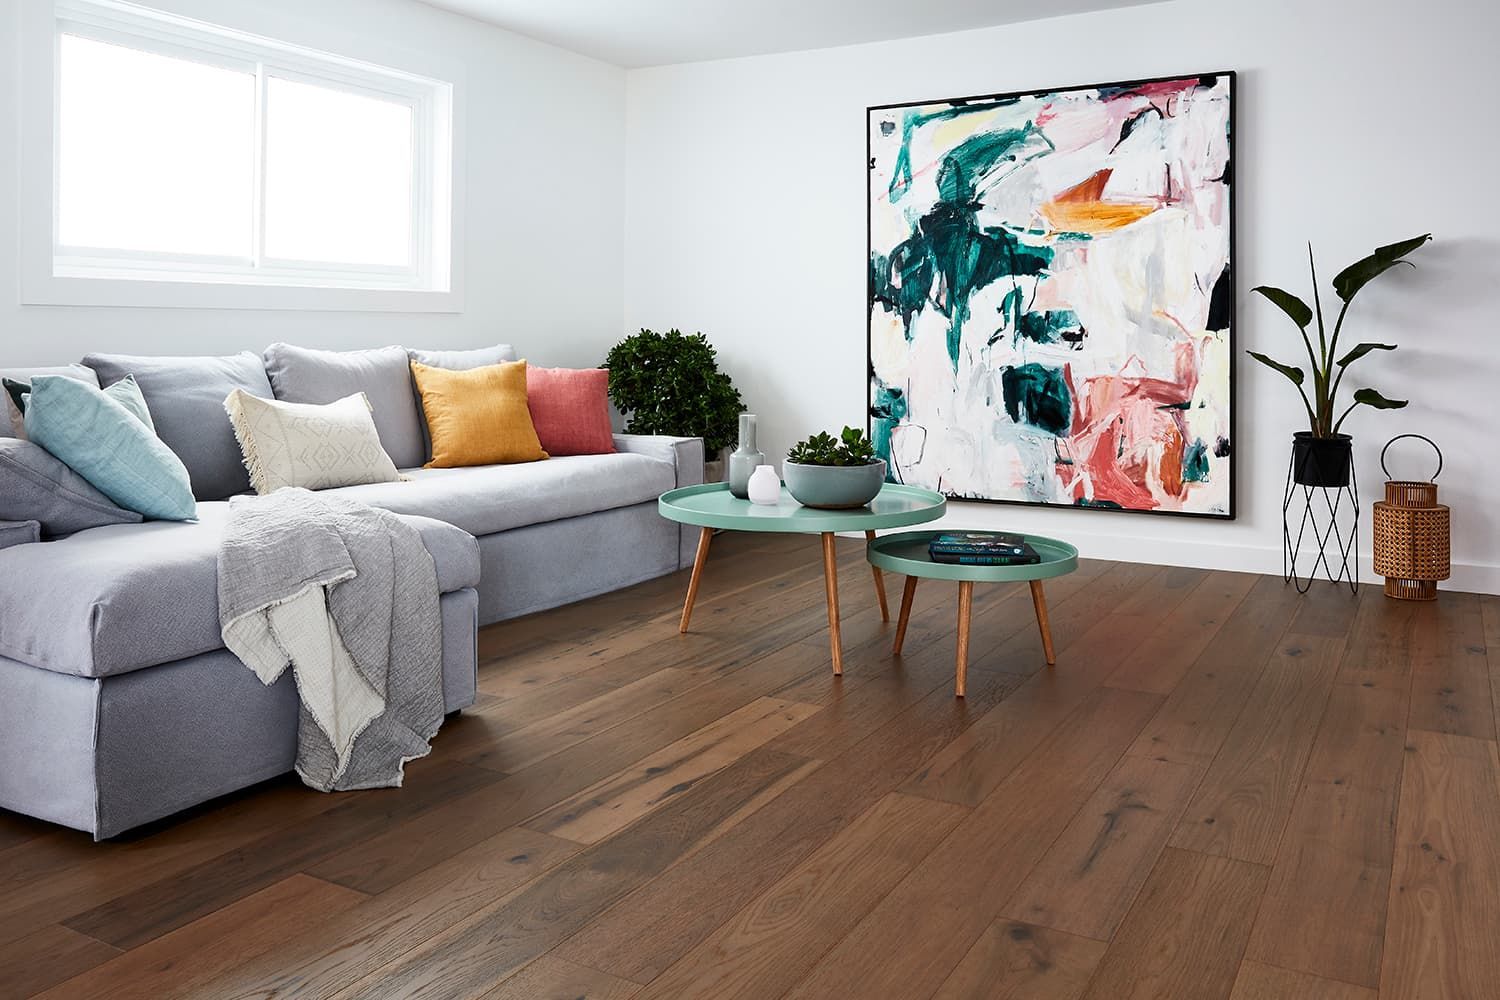 Timber Floor in Living Room — Flooring Supply & Installation In Port Macquarie, NSW